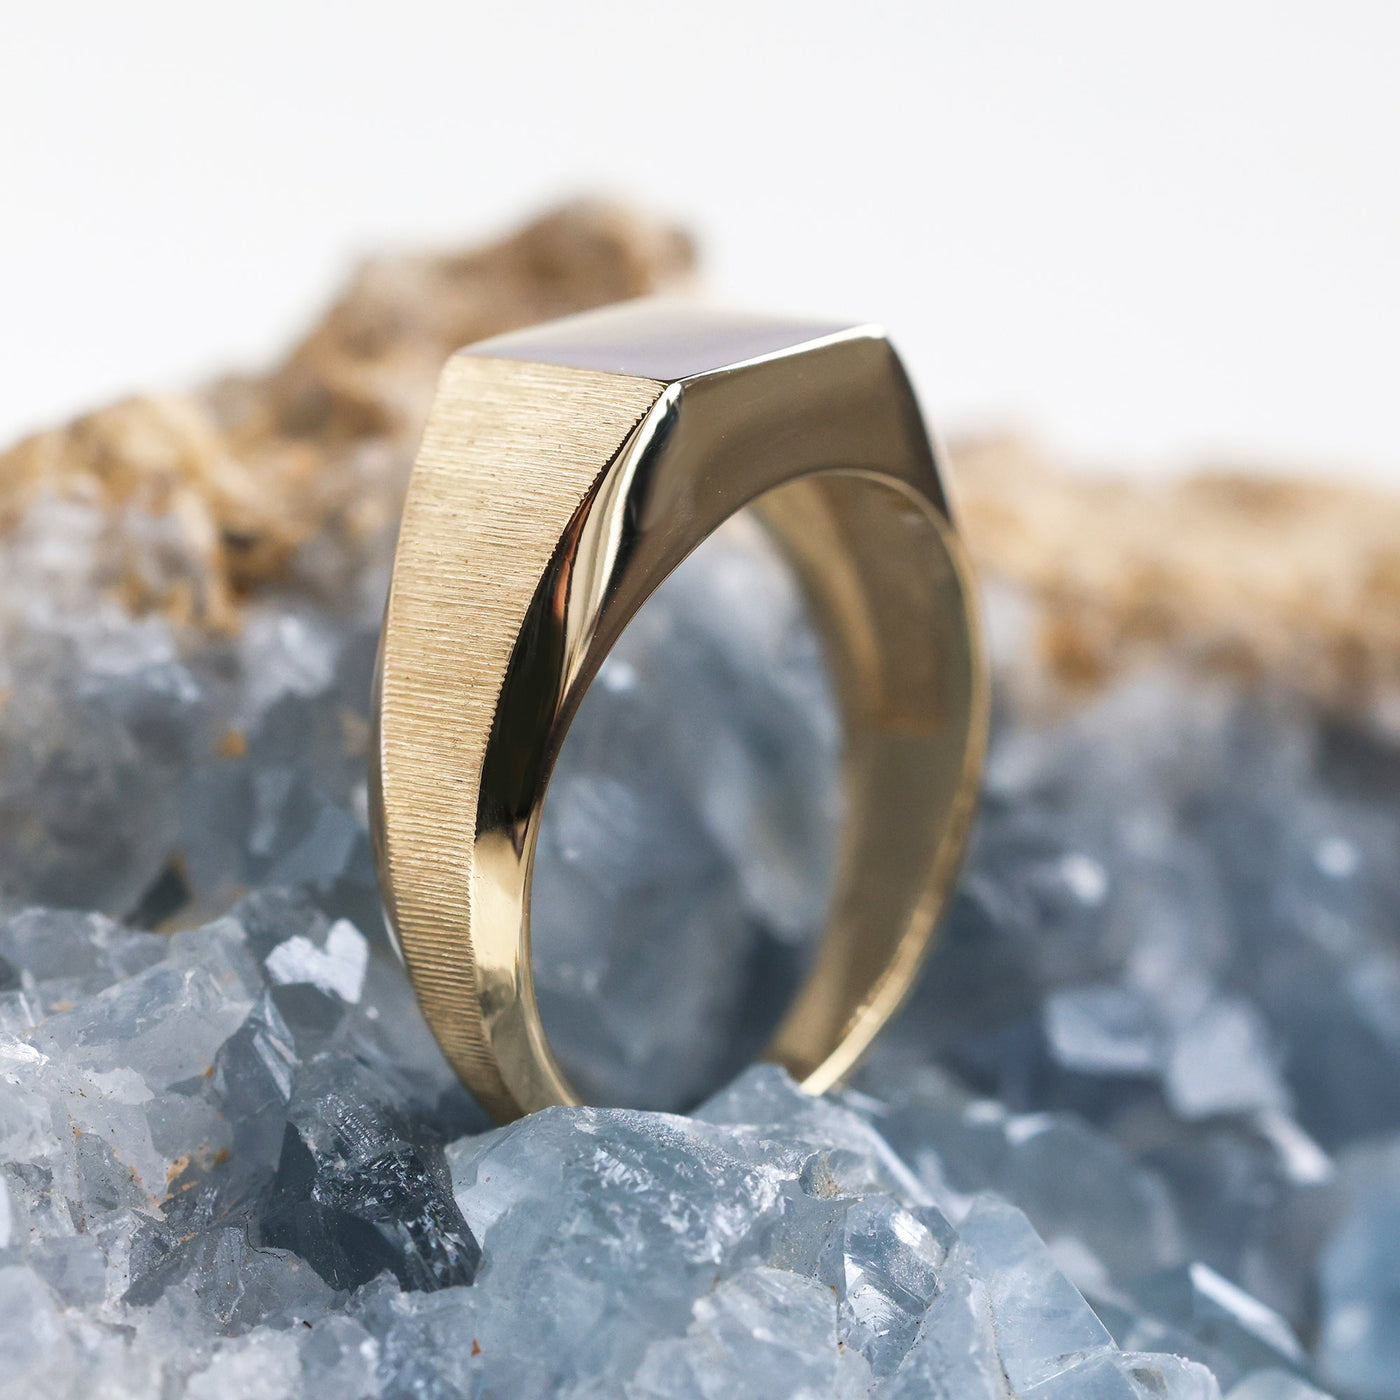 Gold signet ring on a rock, plain polished design, 14k & 18k gold options, customizable with gemstones.